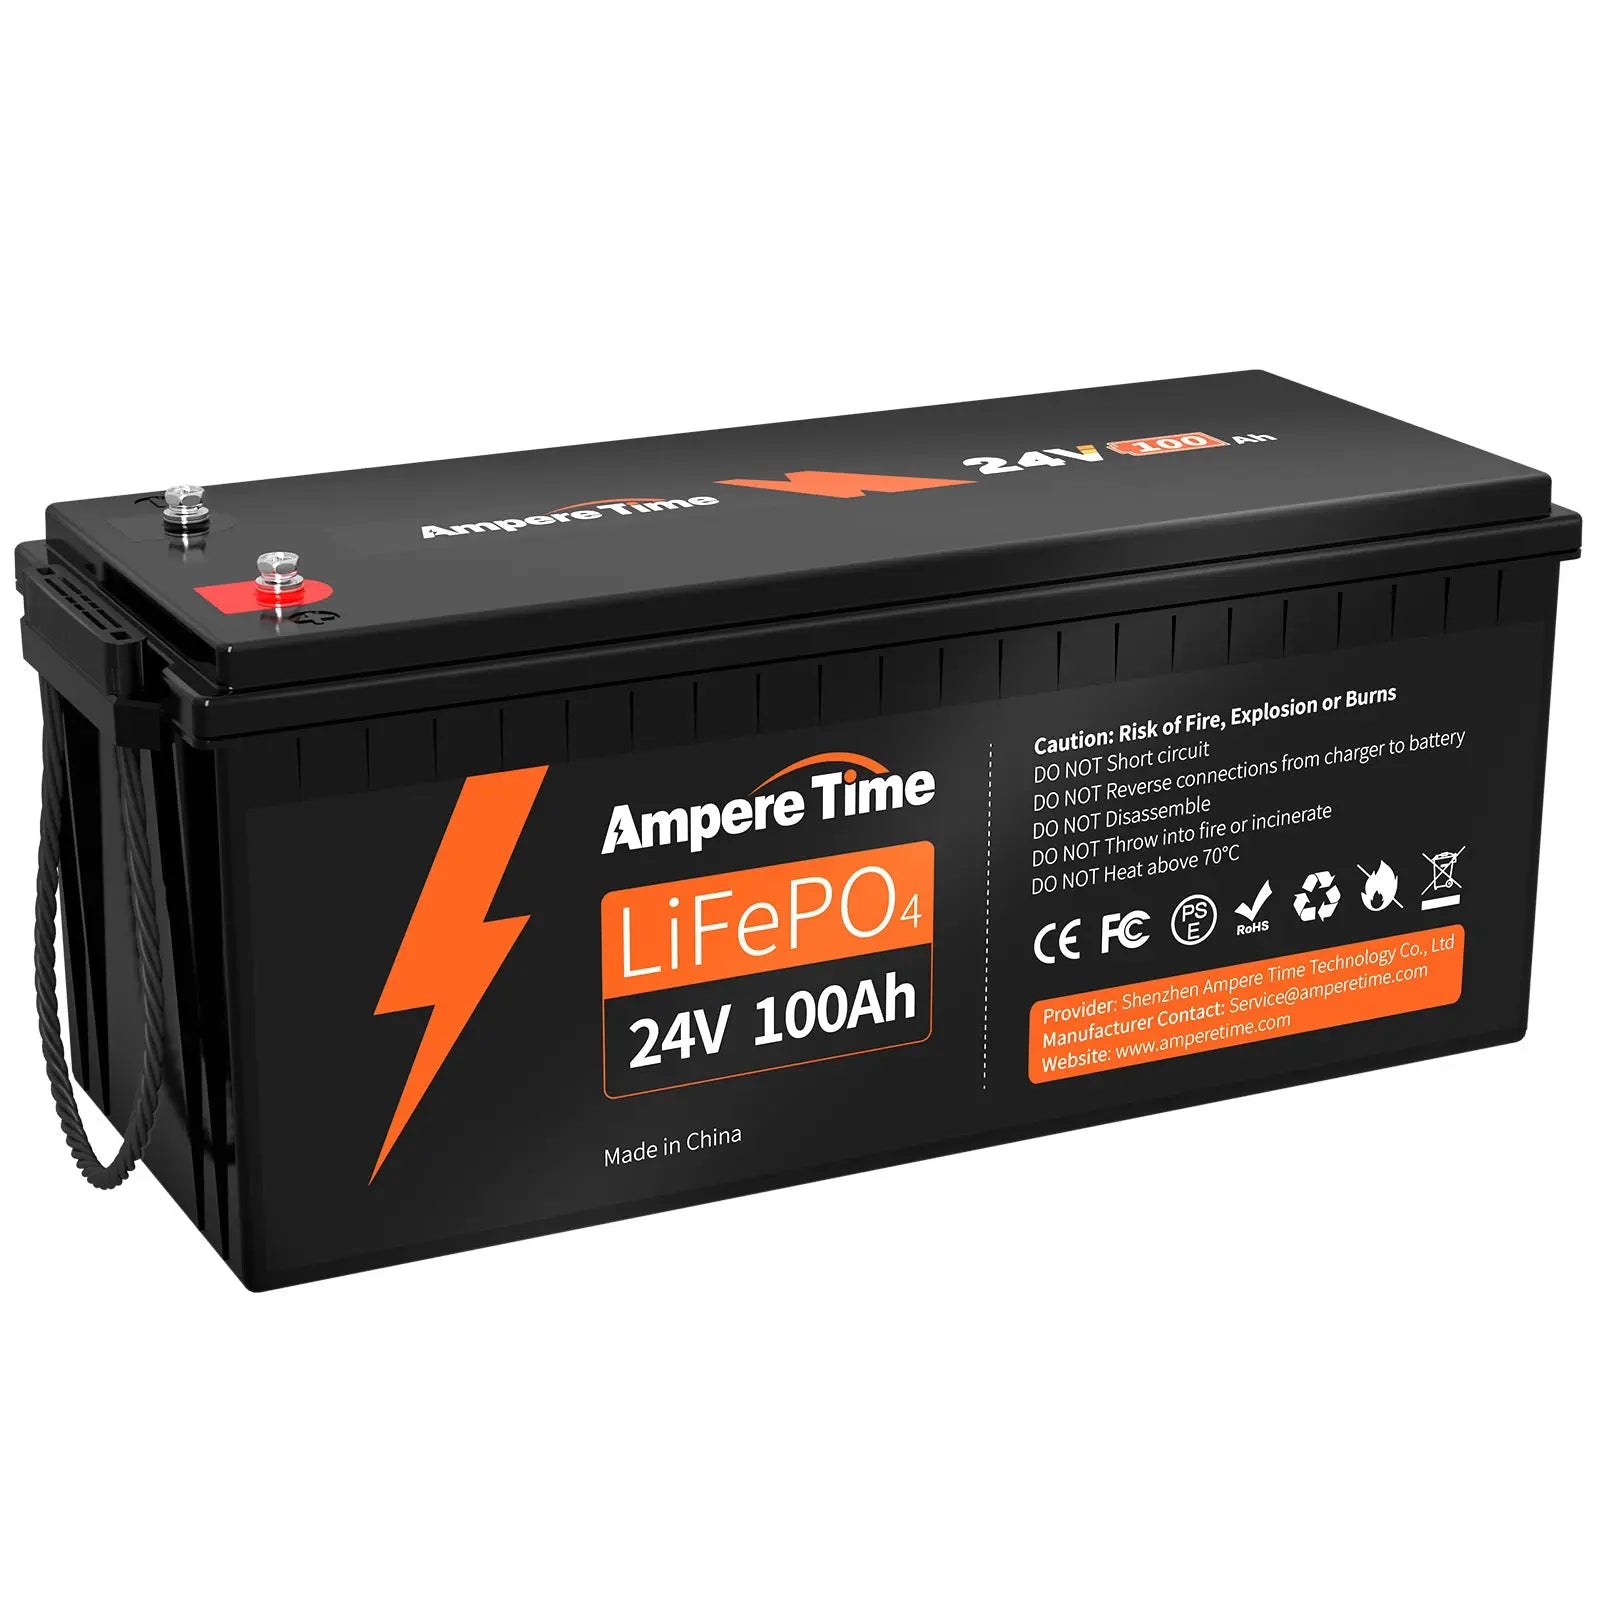 Ampere Time 12V 200Ah Plus, 2560Wh LiFePO4 Battery – Amperetime-US